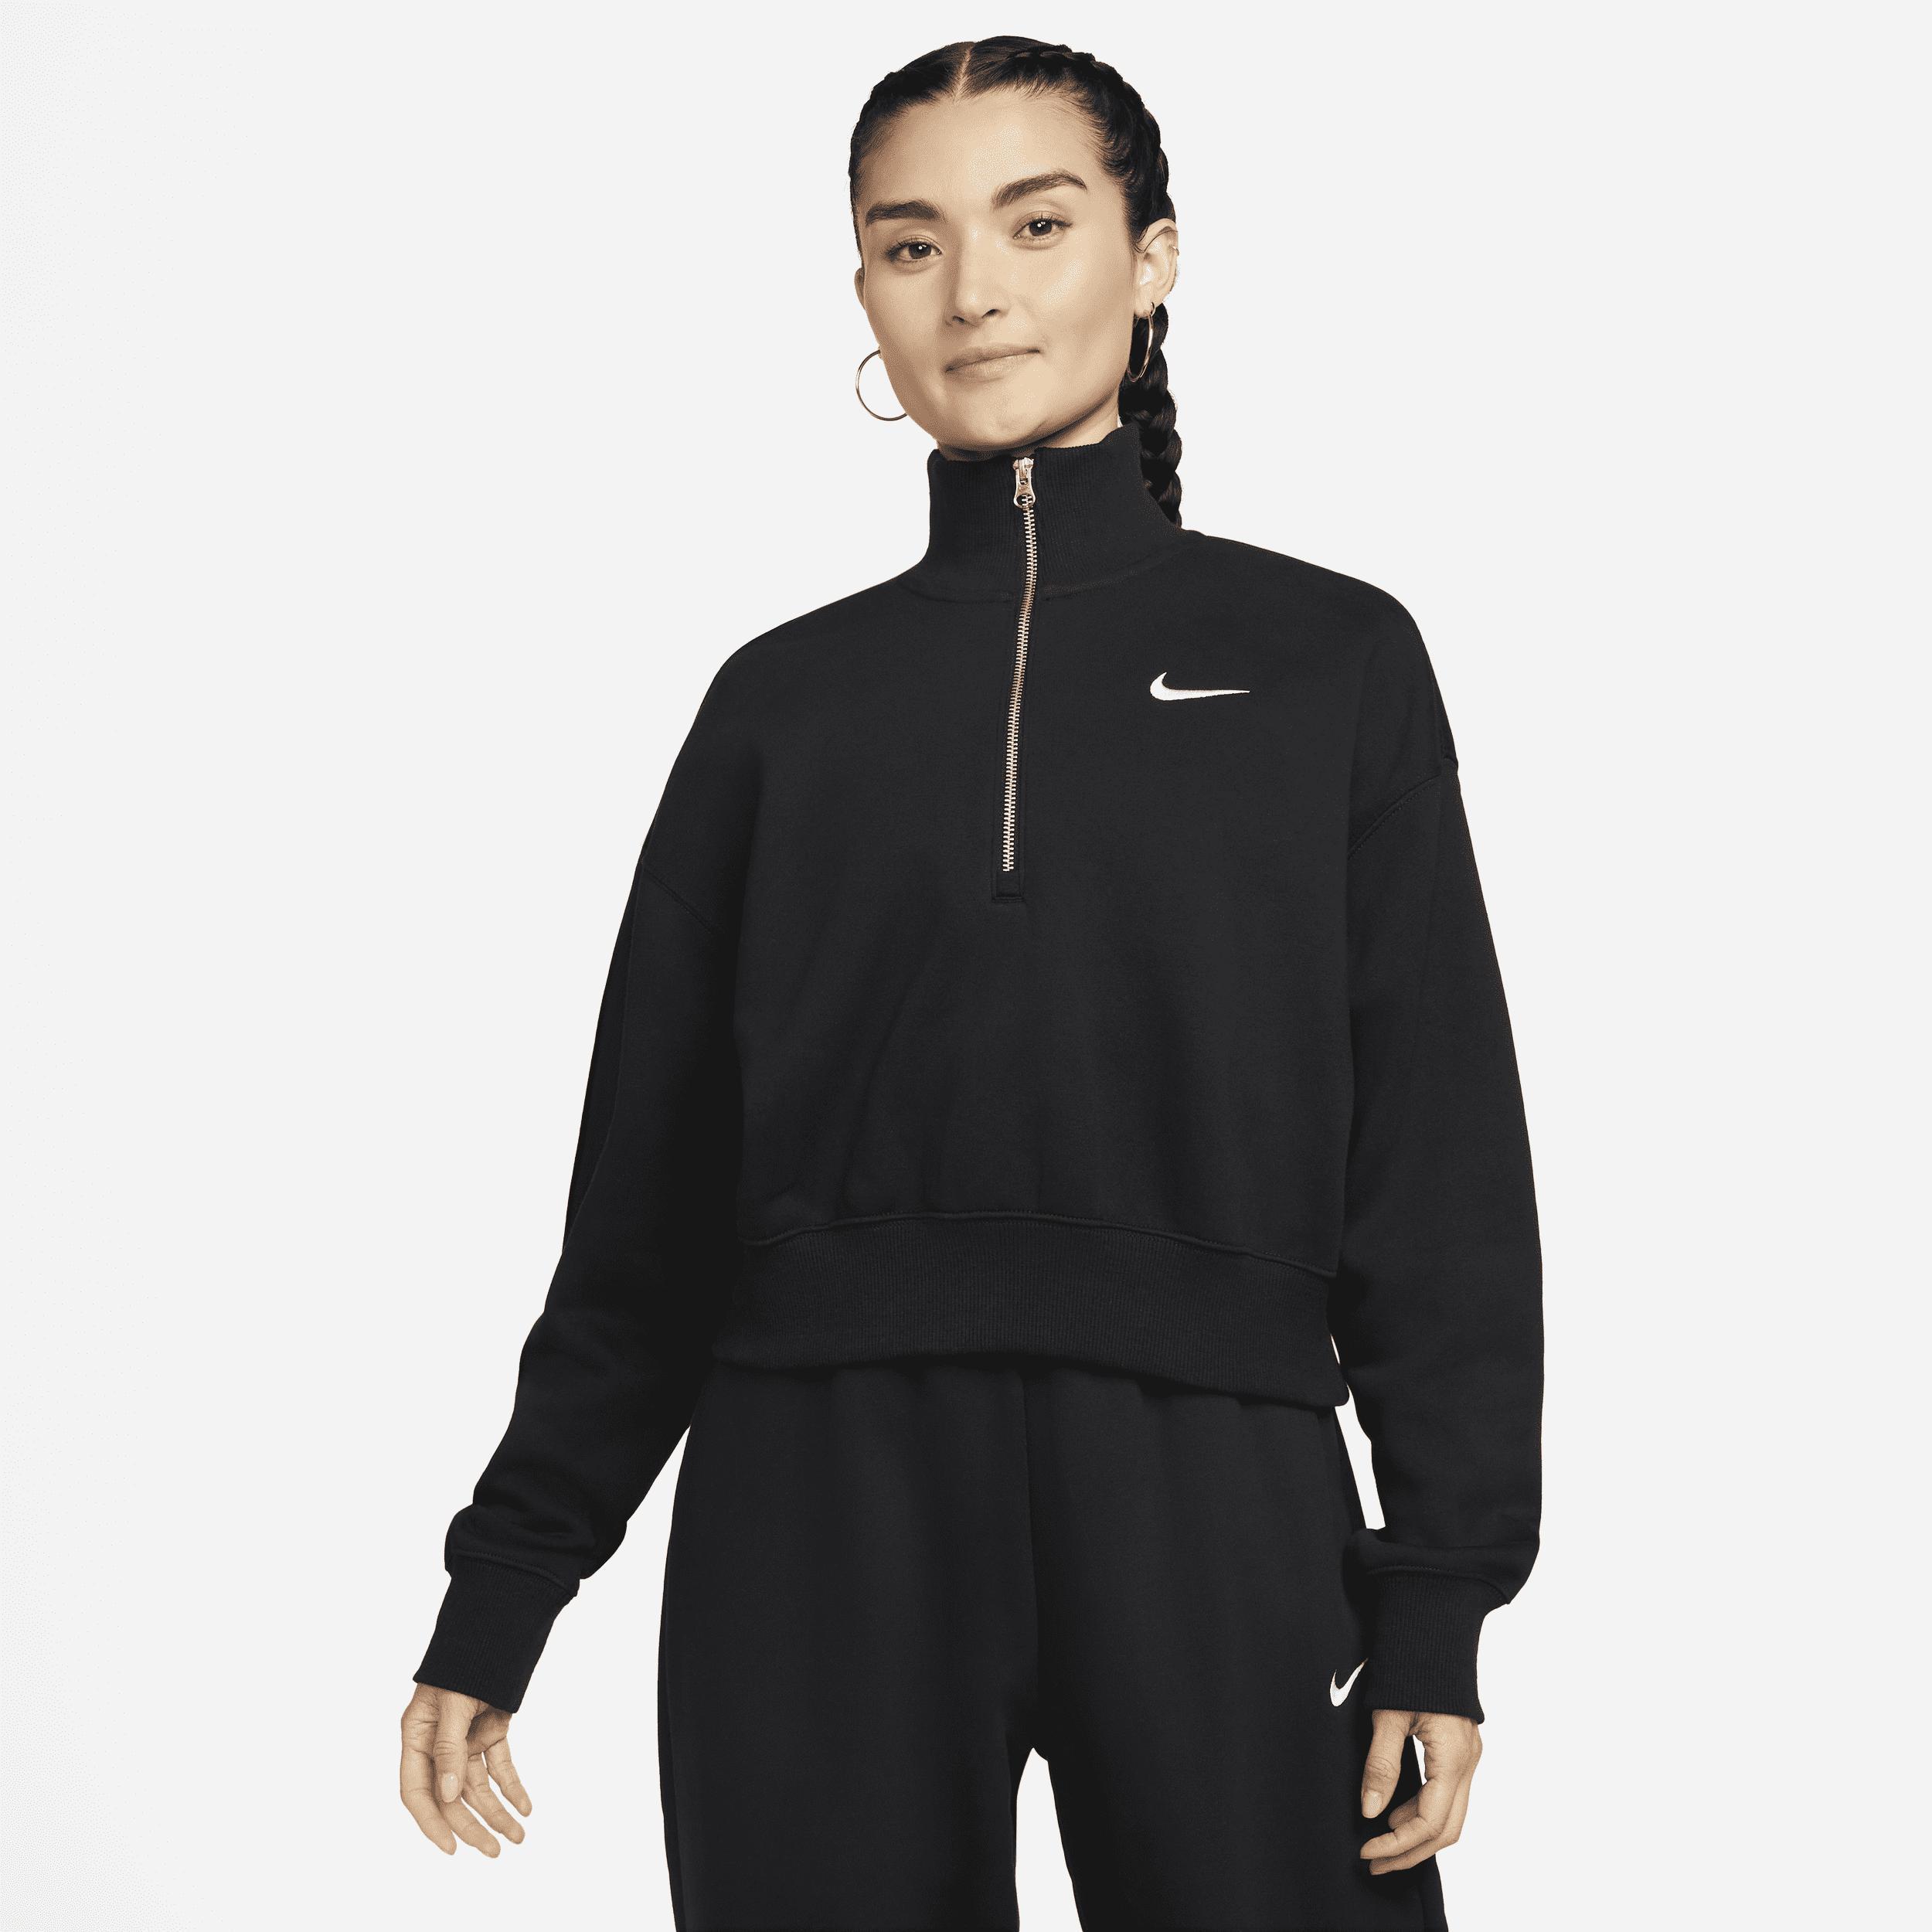 Nike Womens Nike Style Fleece Crop Quarter Zip - Womens Product Image